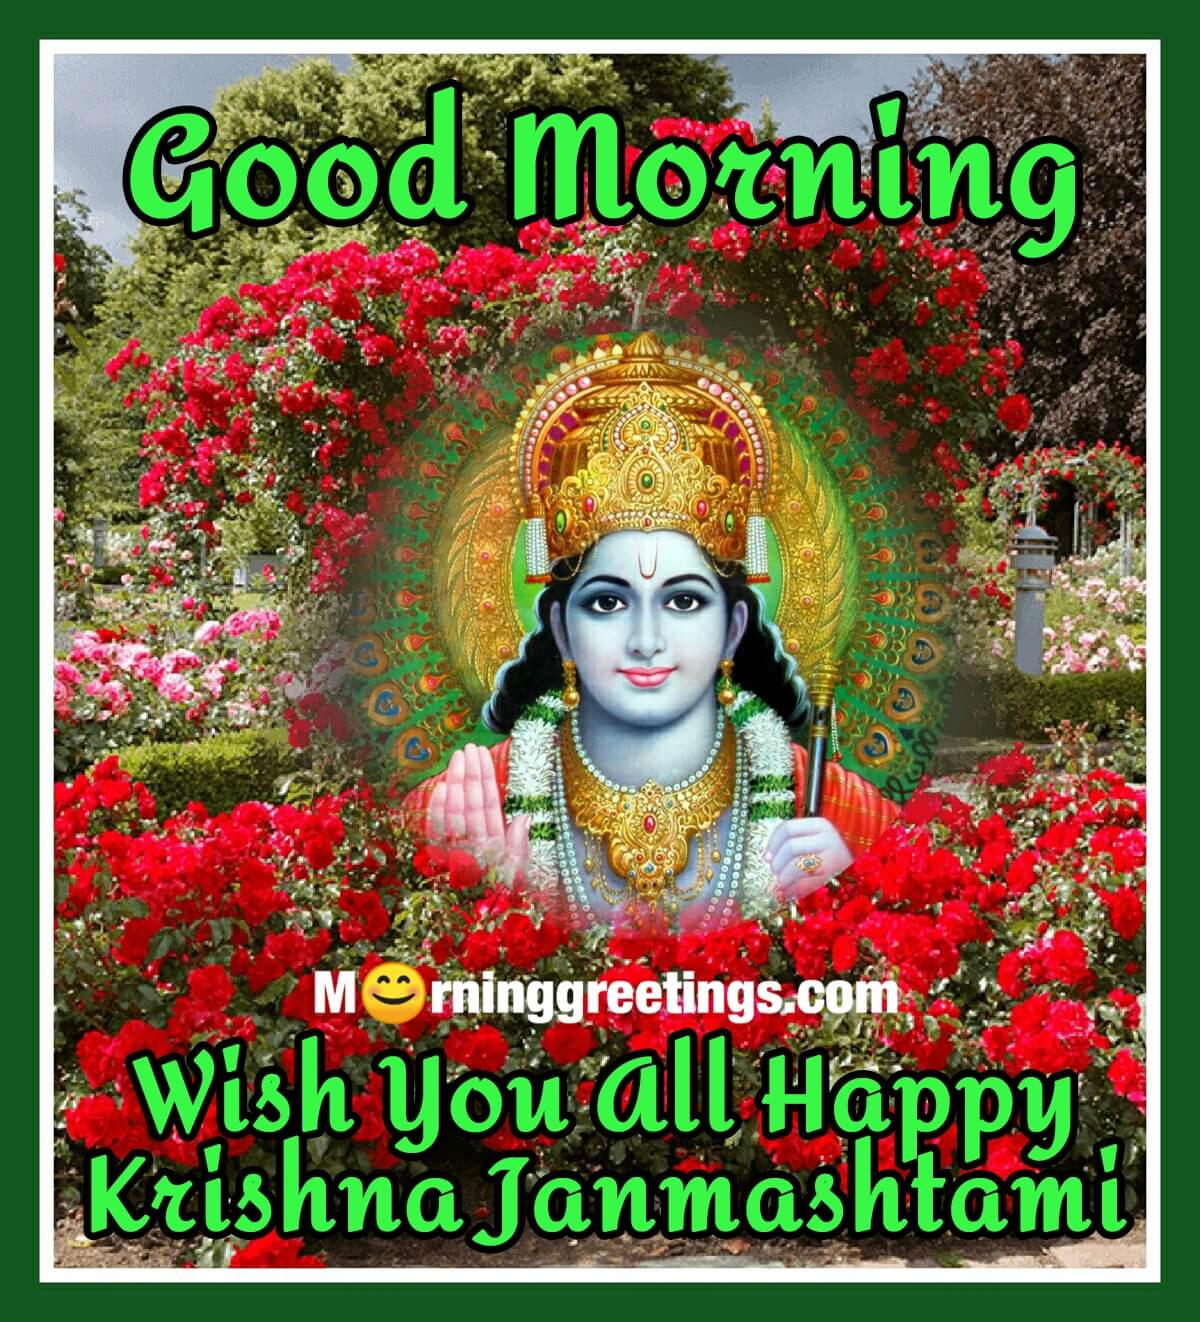 Good Morning Wish You All A Very Happy Krishna Janmashtami